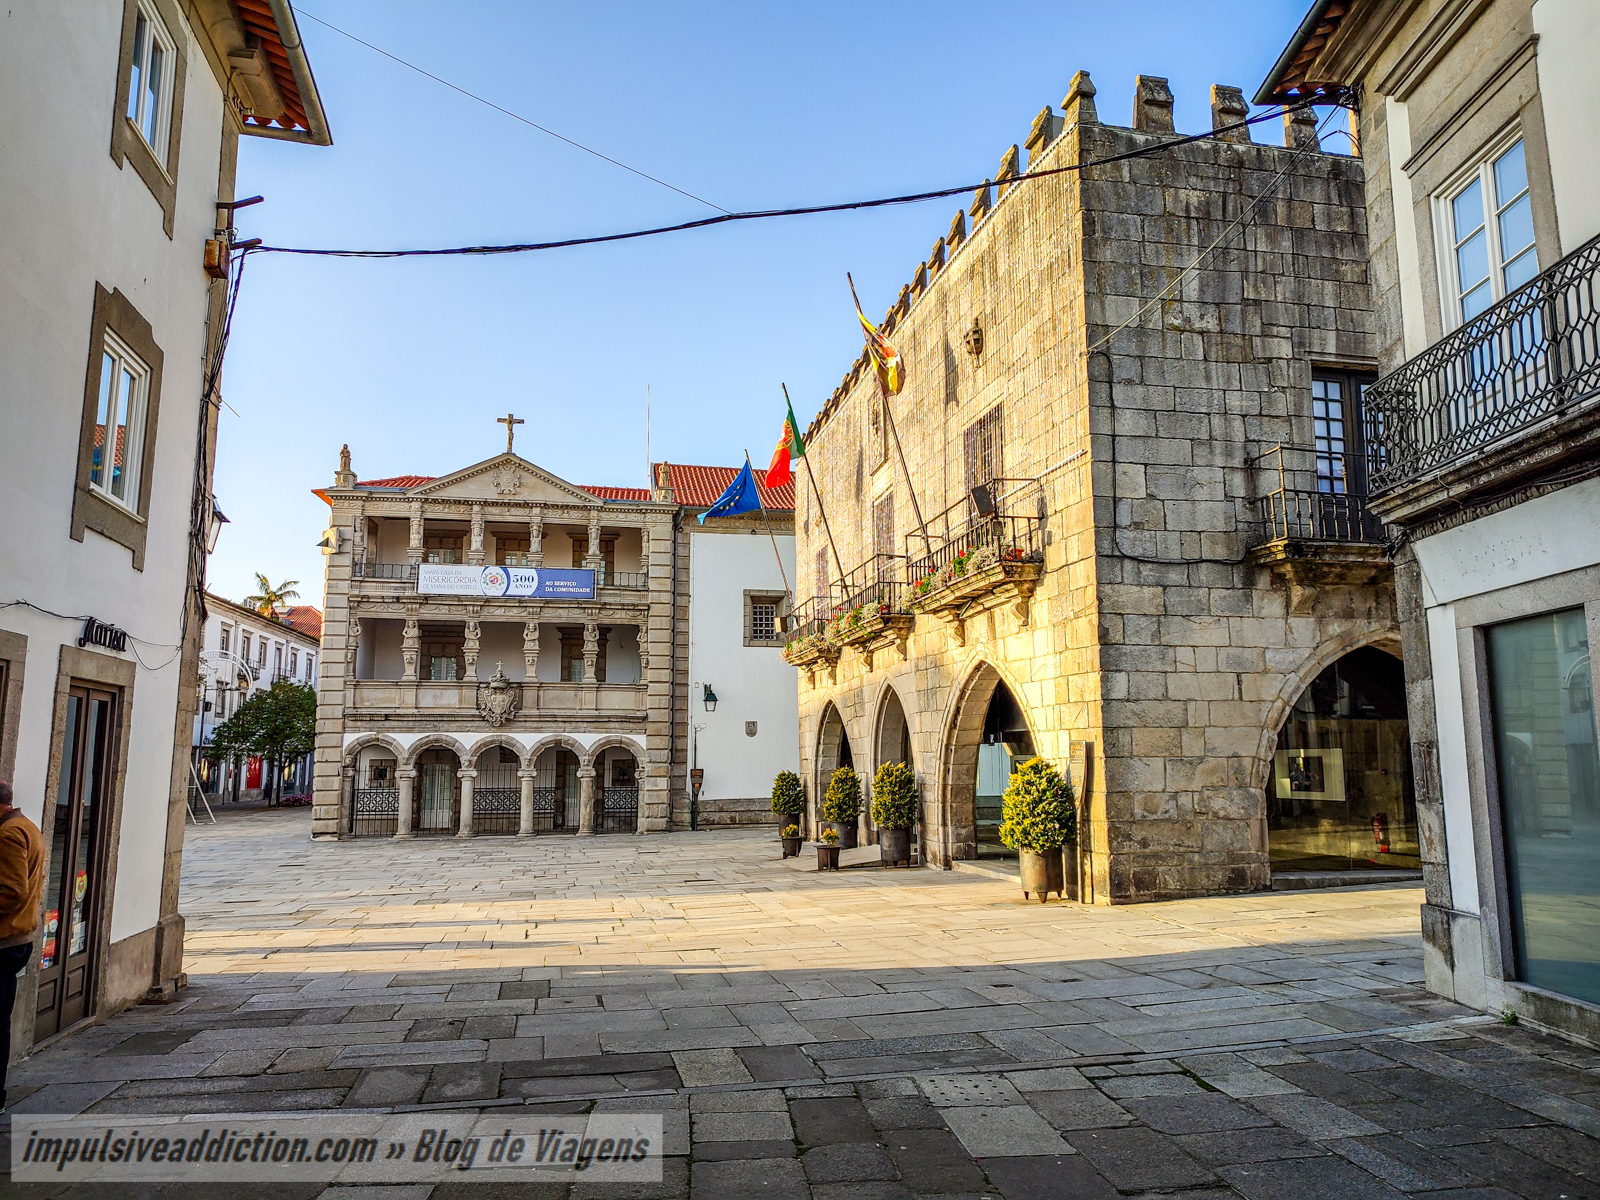 Republic Square in Viana do Castelo